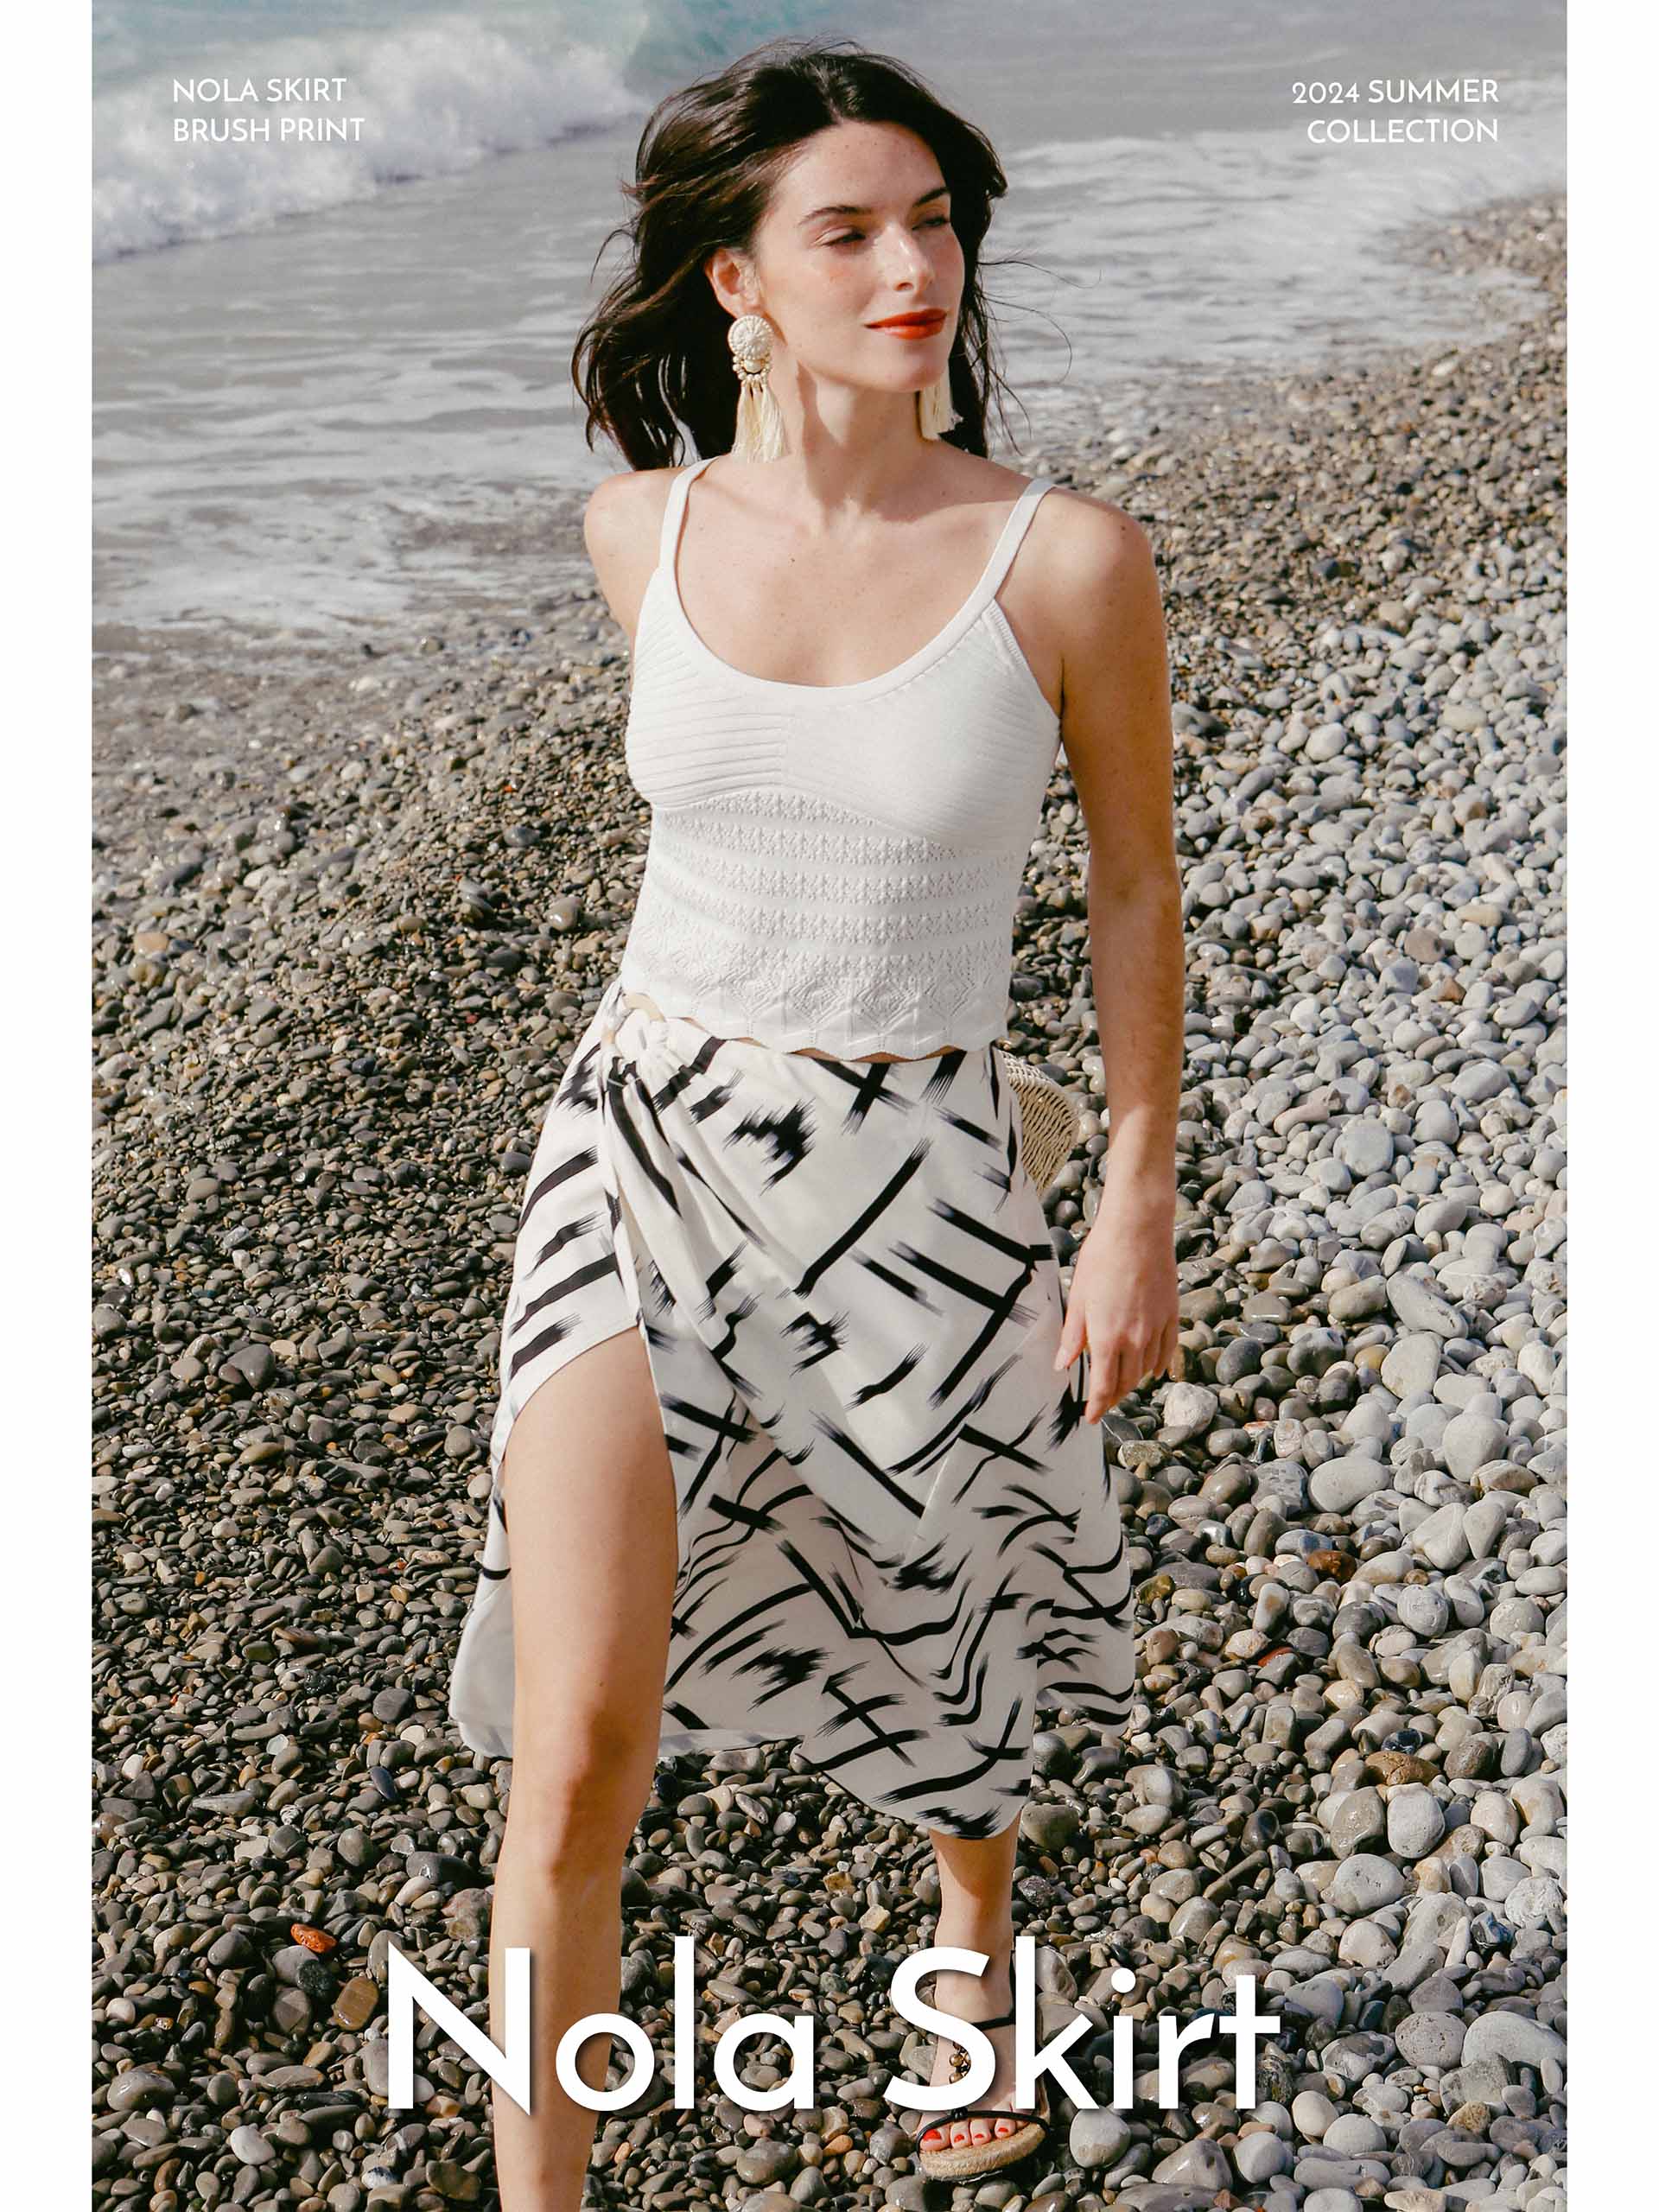 2024 Summer Collection - Petite Studio NYC - Nola Skirt in Brush Print